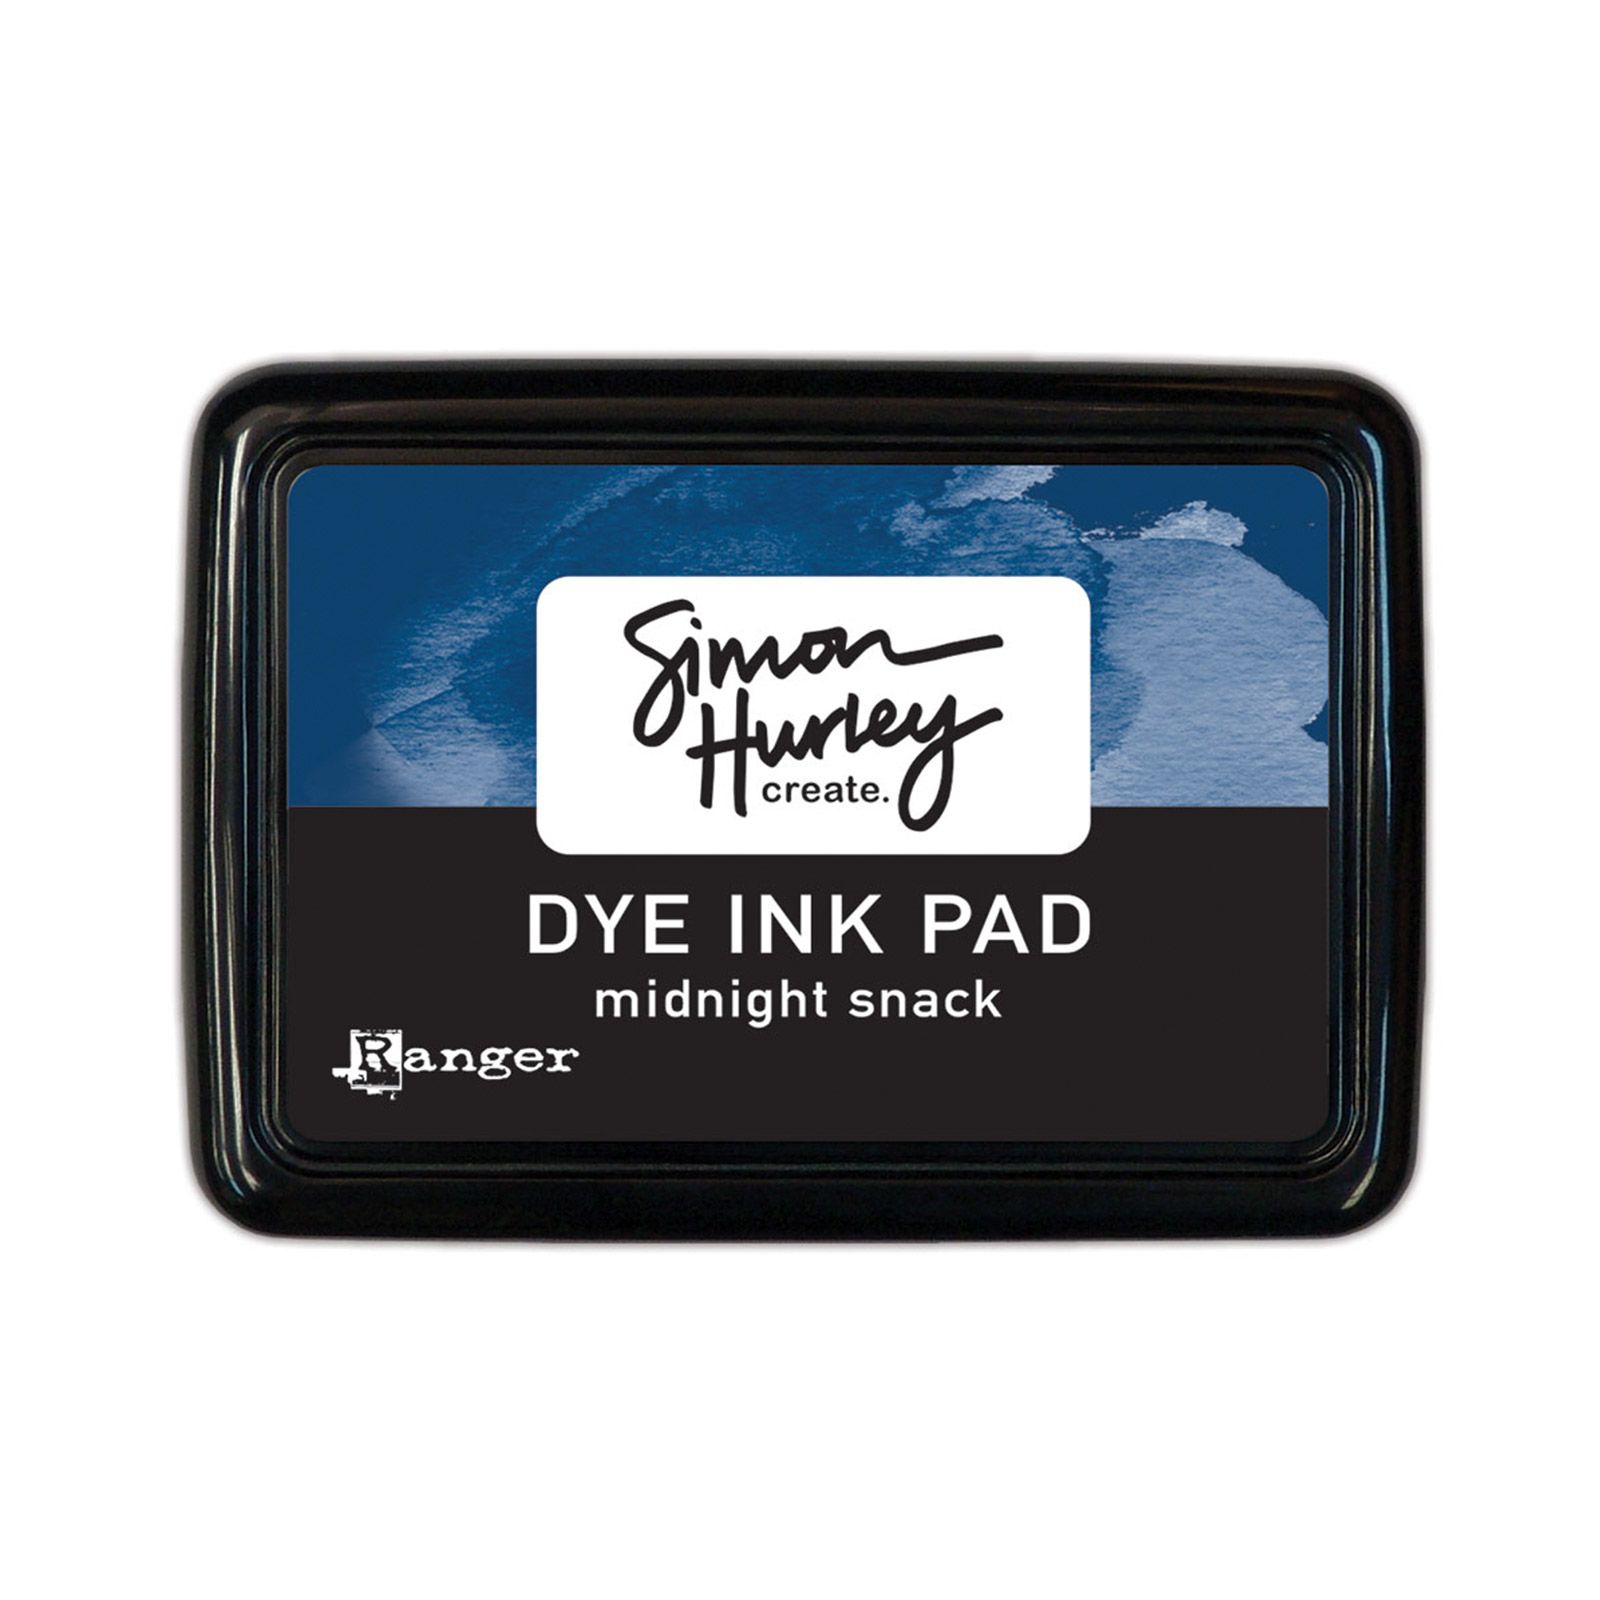 Ranger • Simon Hurley create. ink pad midnight snack